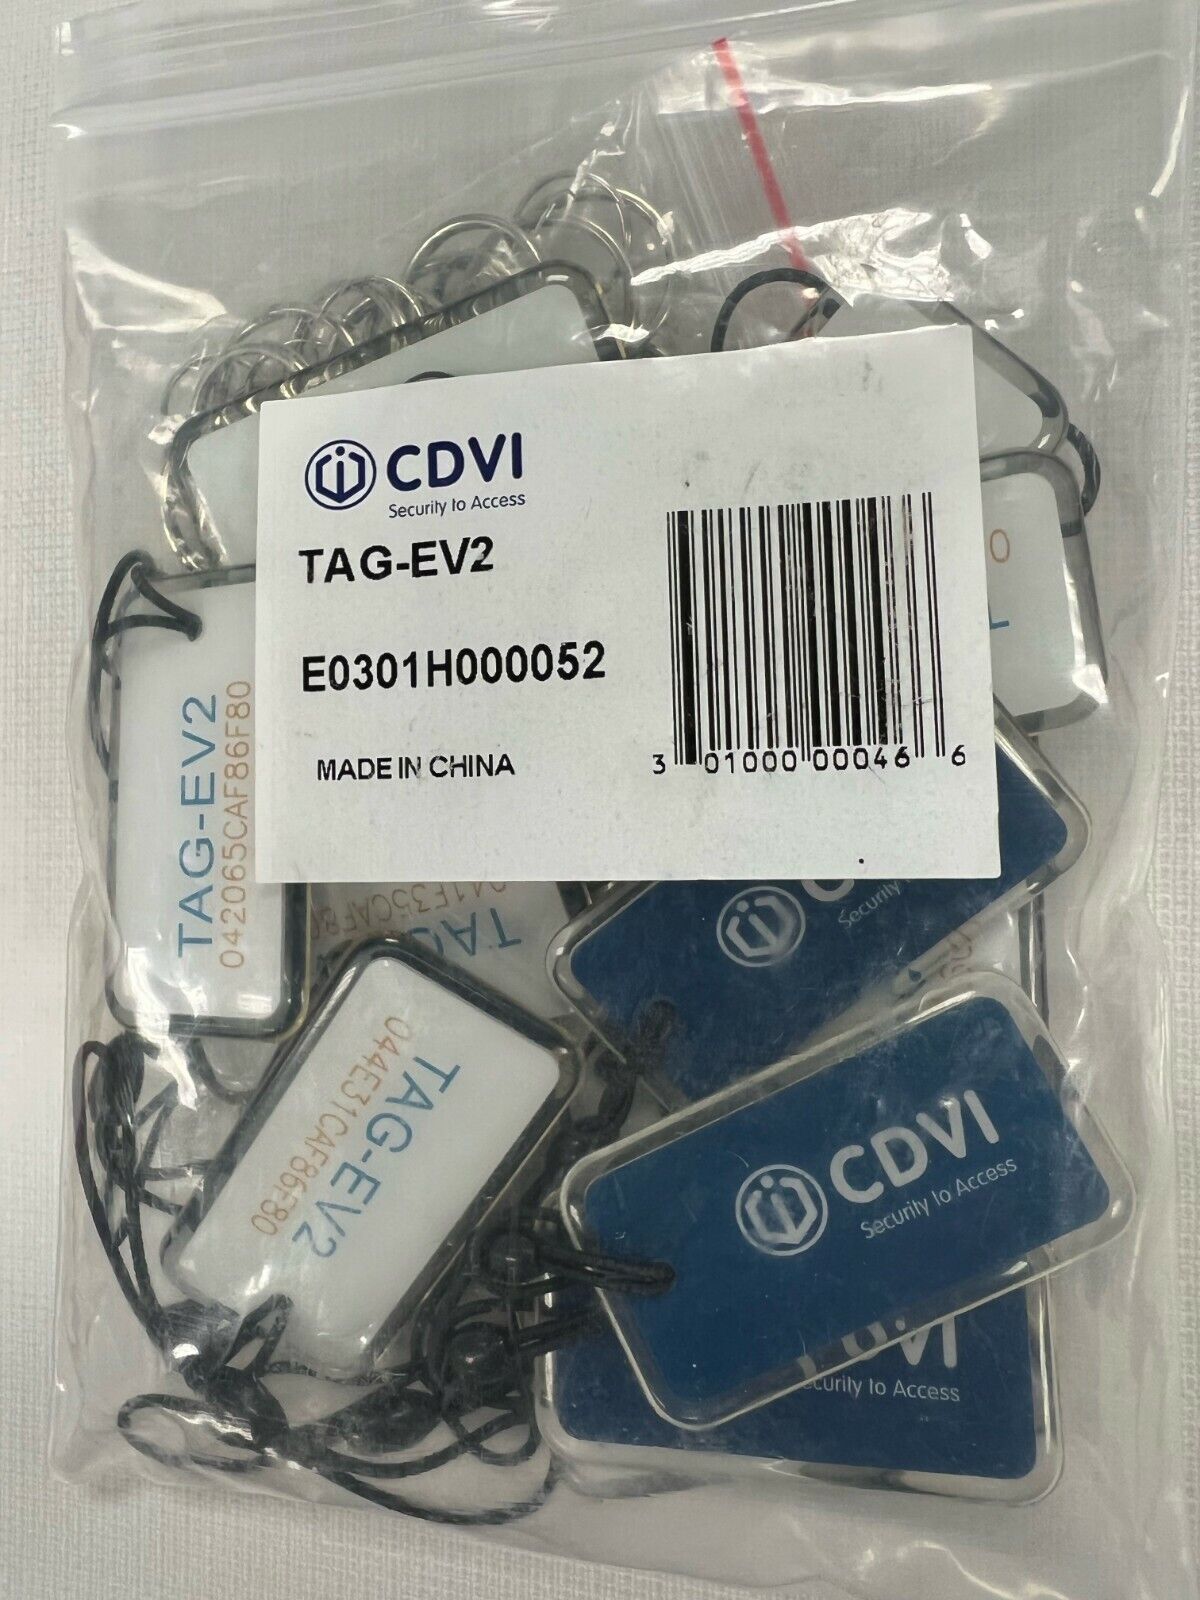 15x CDVI TAG-EV2 Proximity Outlet SALE Key E0301H000052 Badge Max 77% OFF